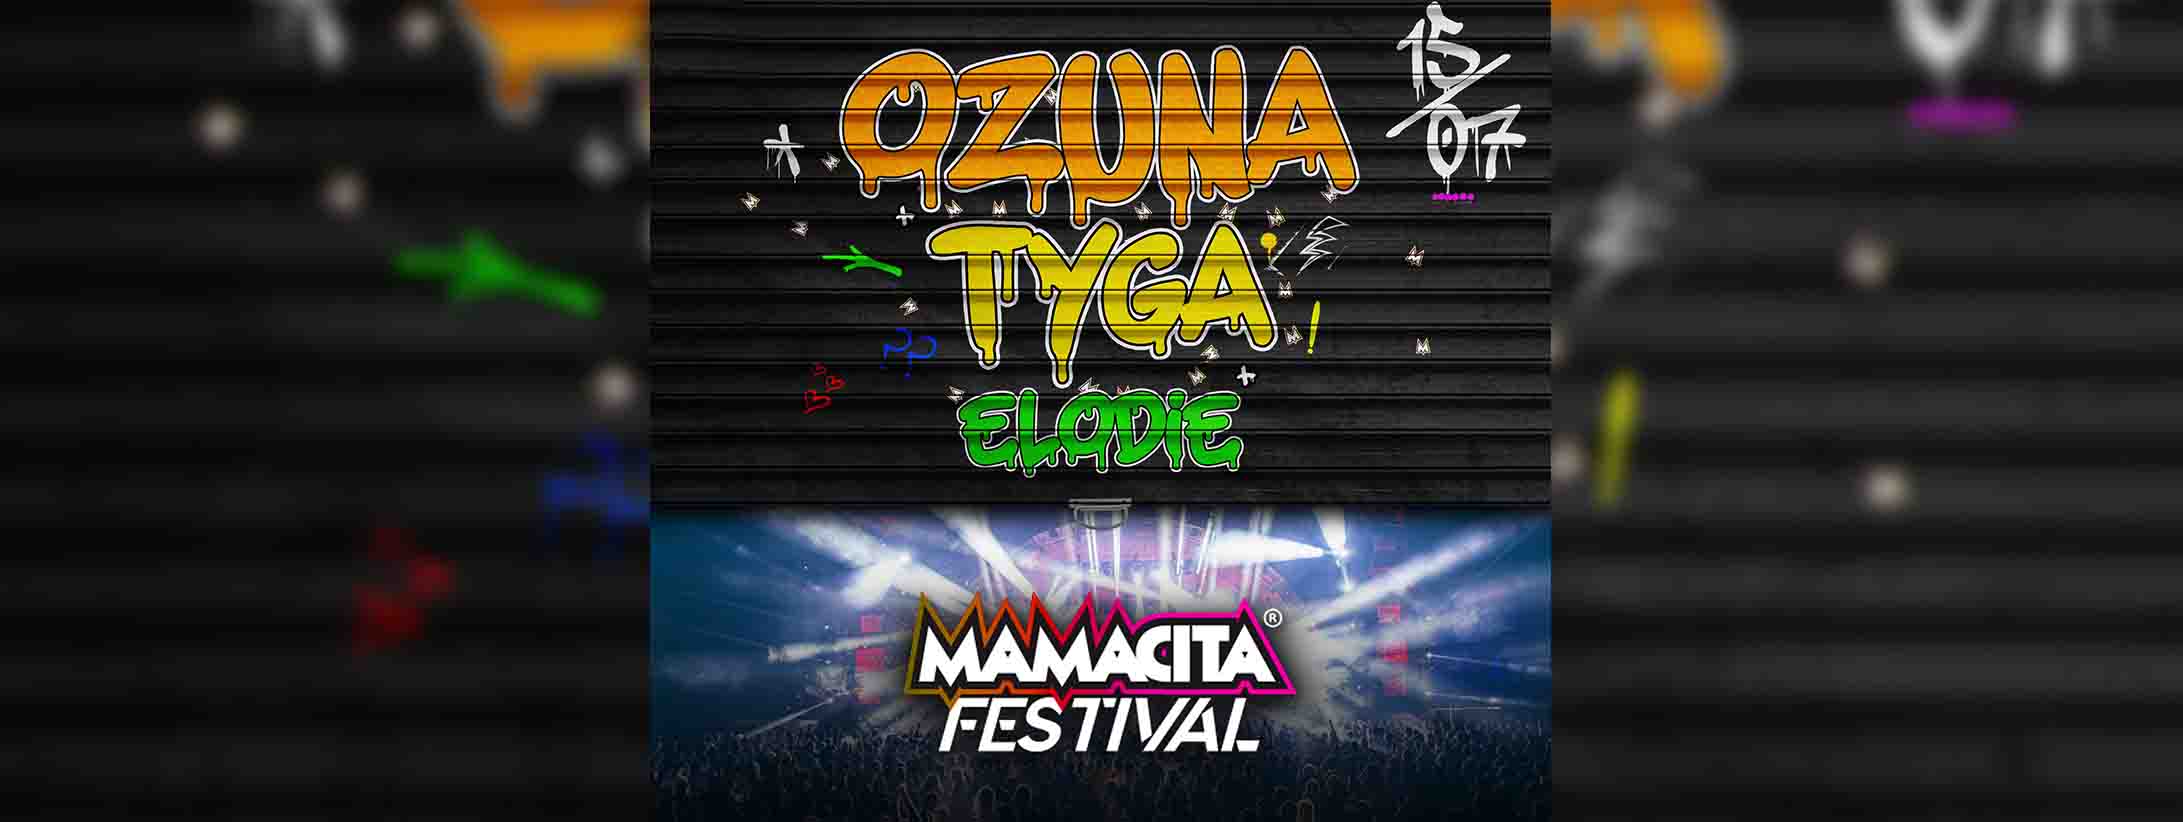 OZUNA-ELODIE-MAMACITA-FESTIVAL-2022-RIMINI